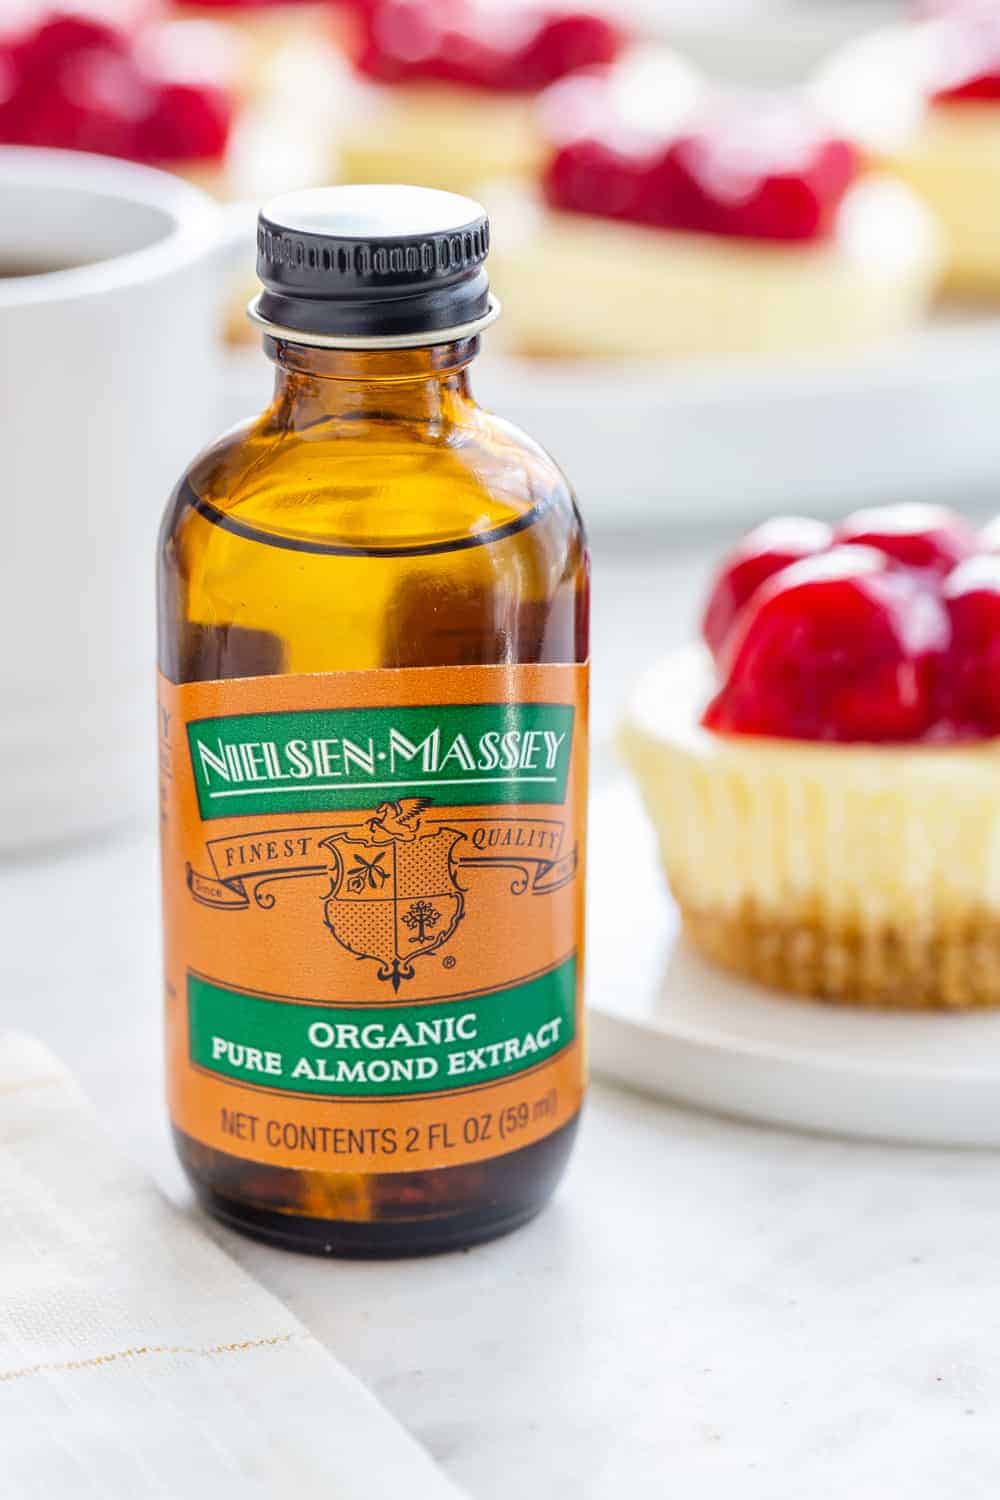 Nielsen-Massey Organic Pure Almond Extract